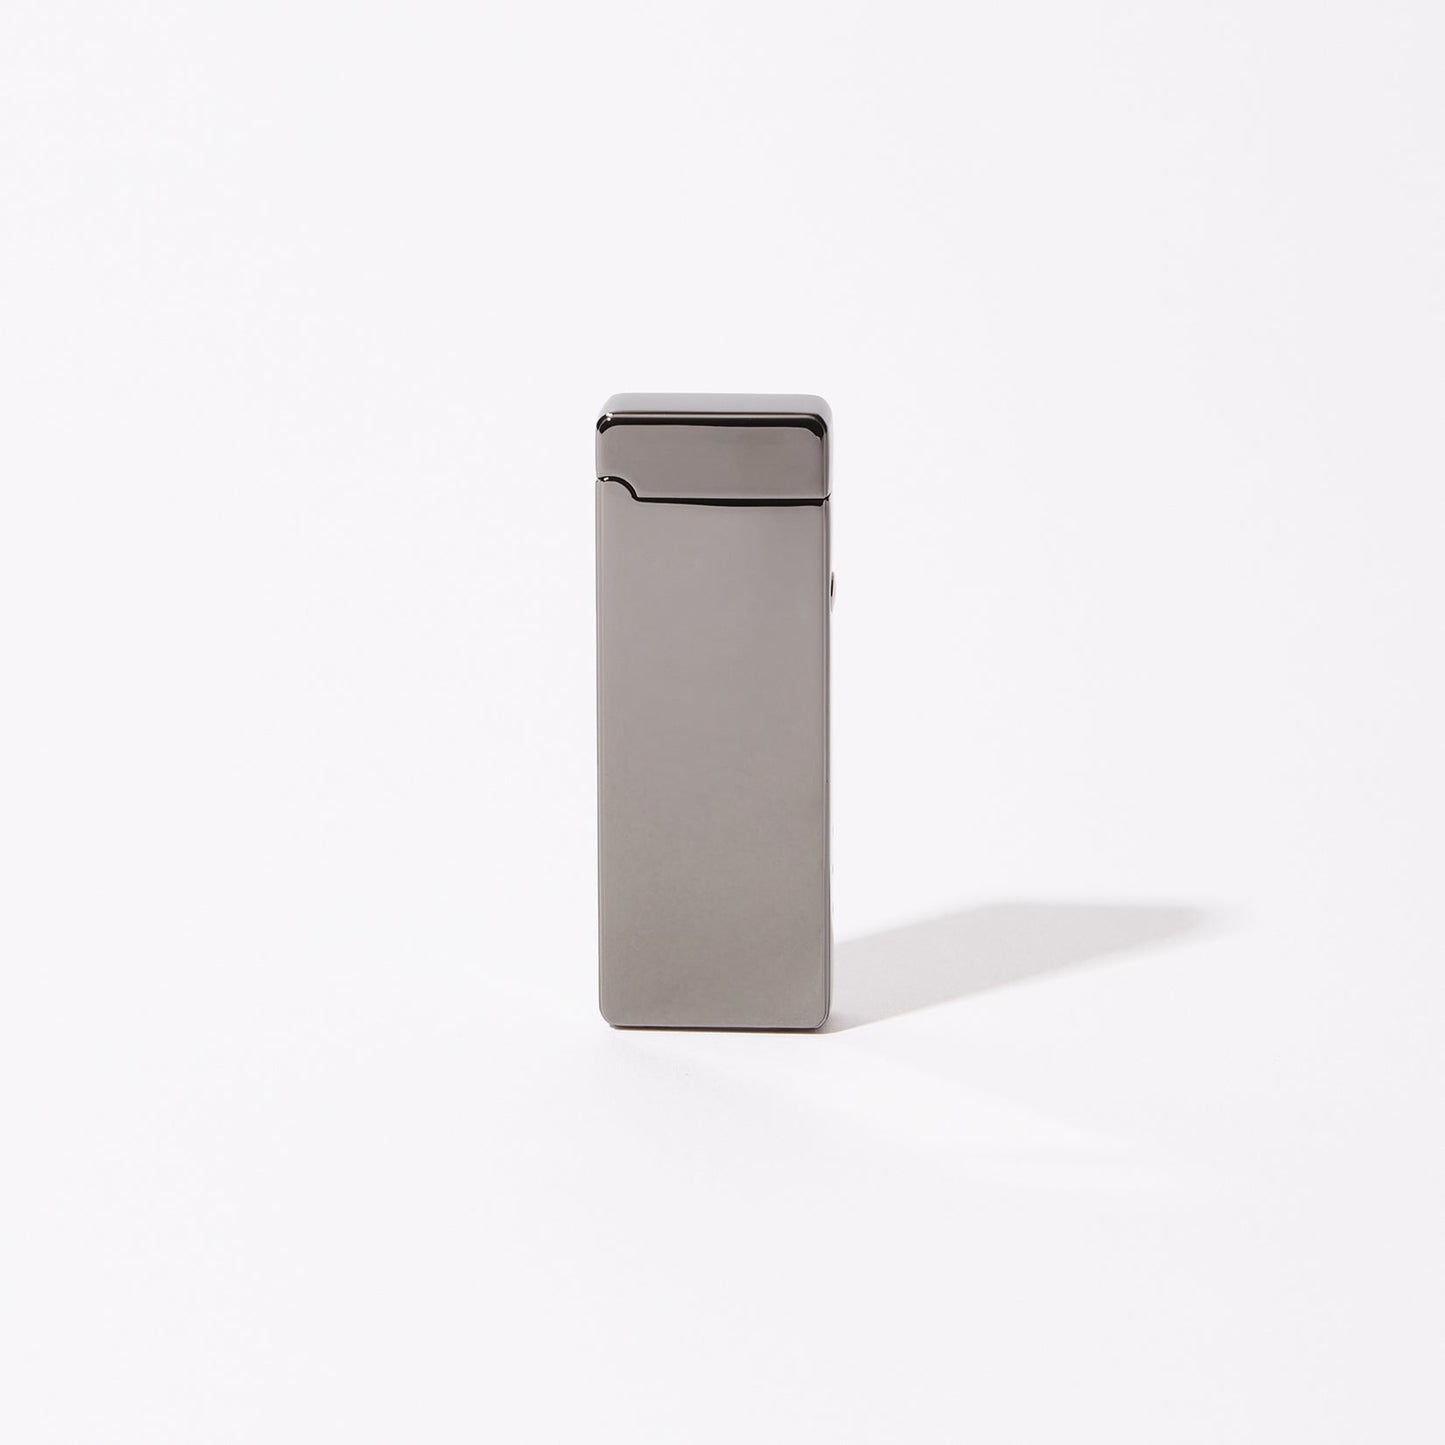 Pocket Lighter - Gun Metal by The USB Lighter Company